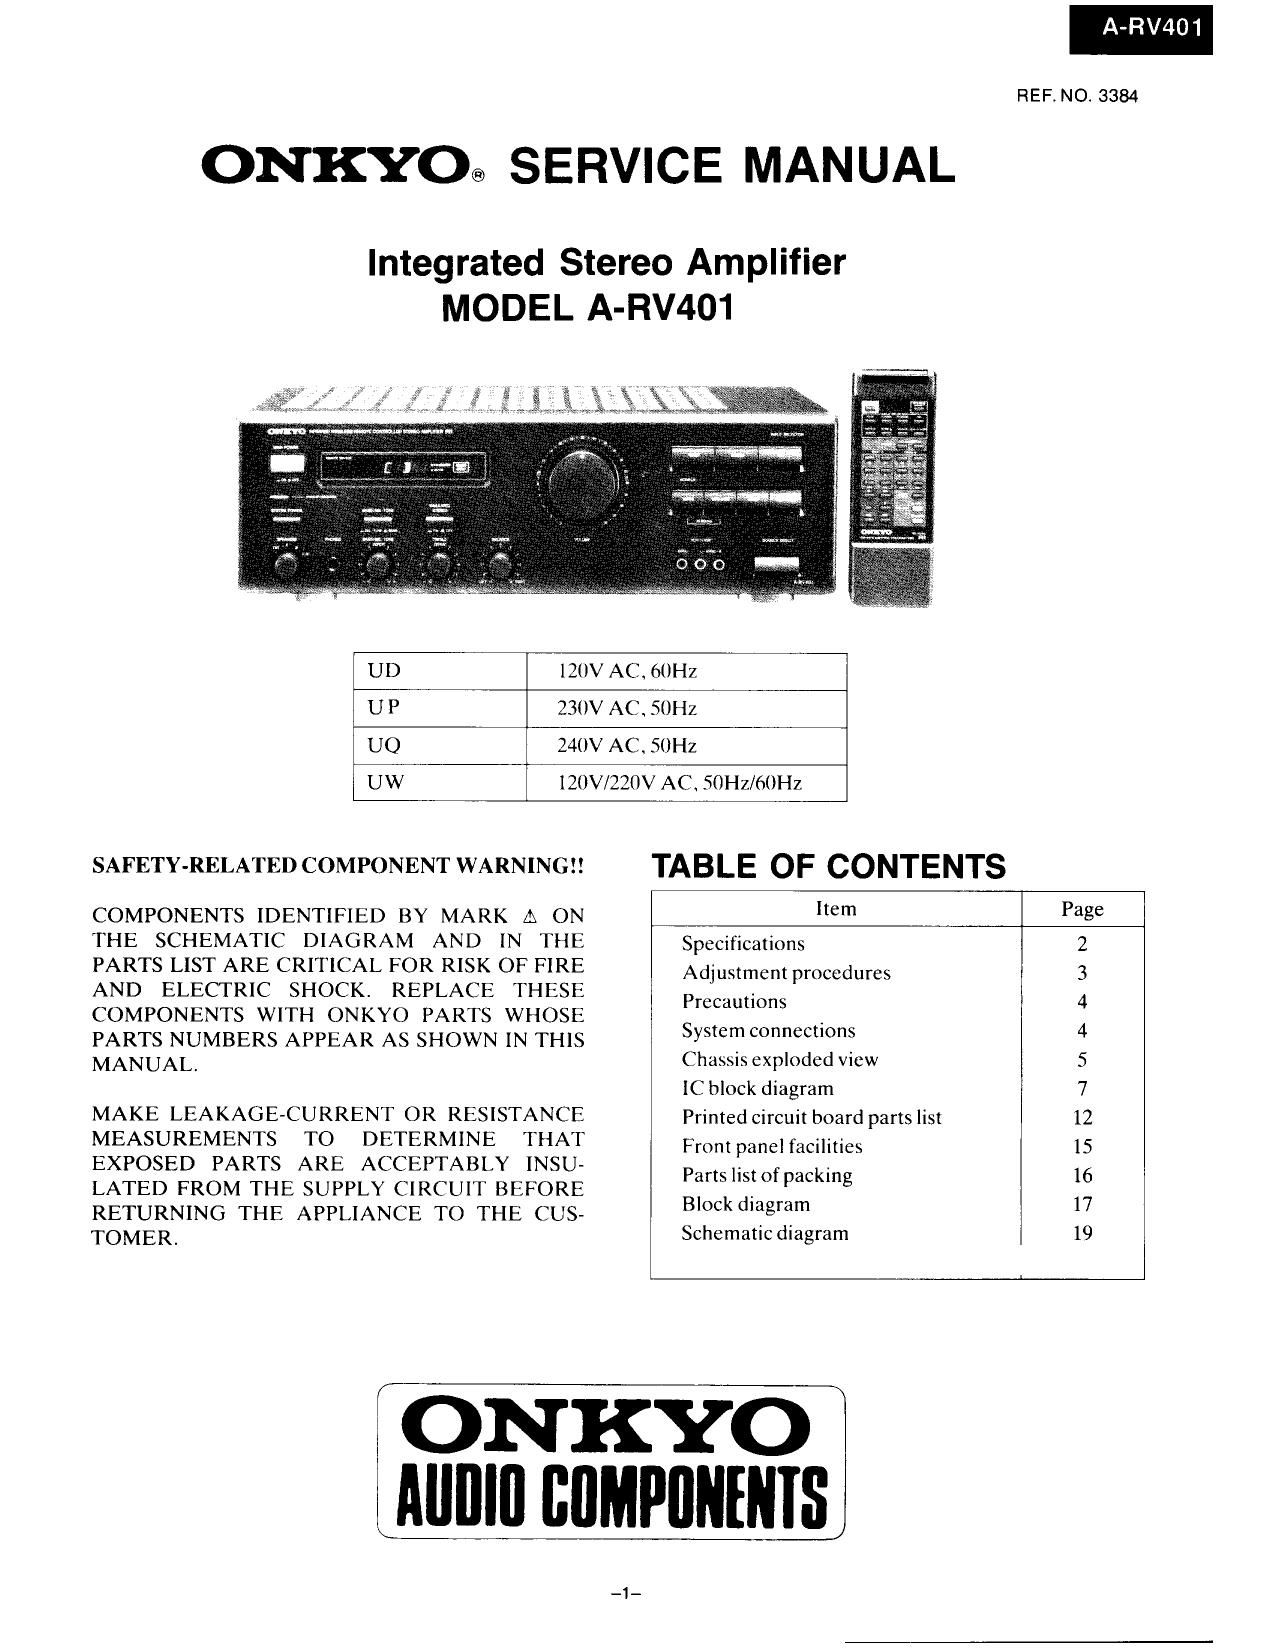 Onkyo ARV 401 Service Manual